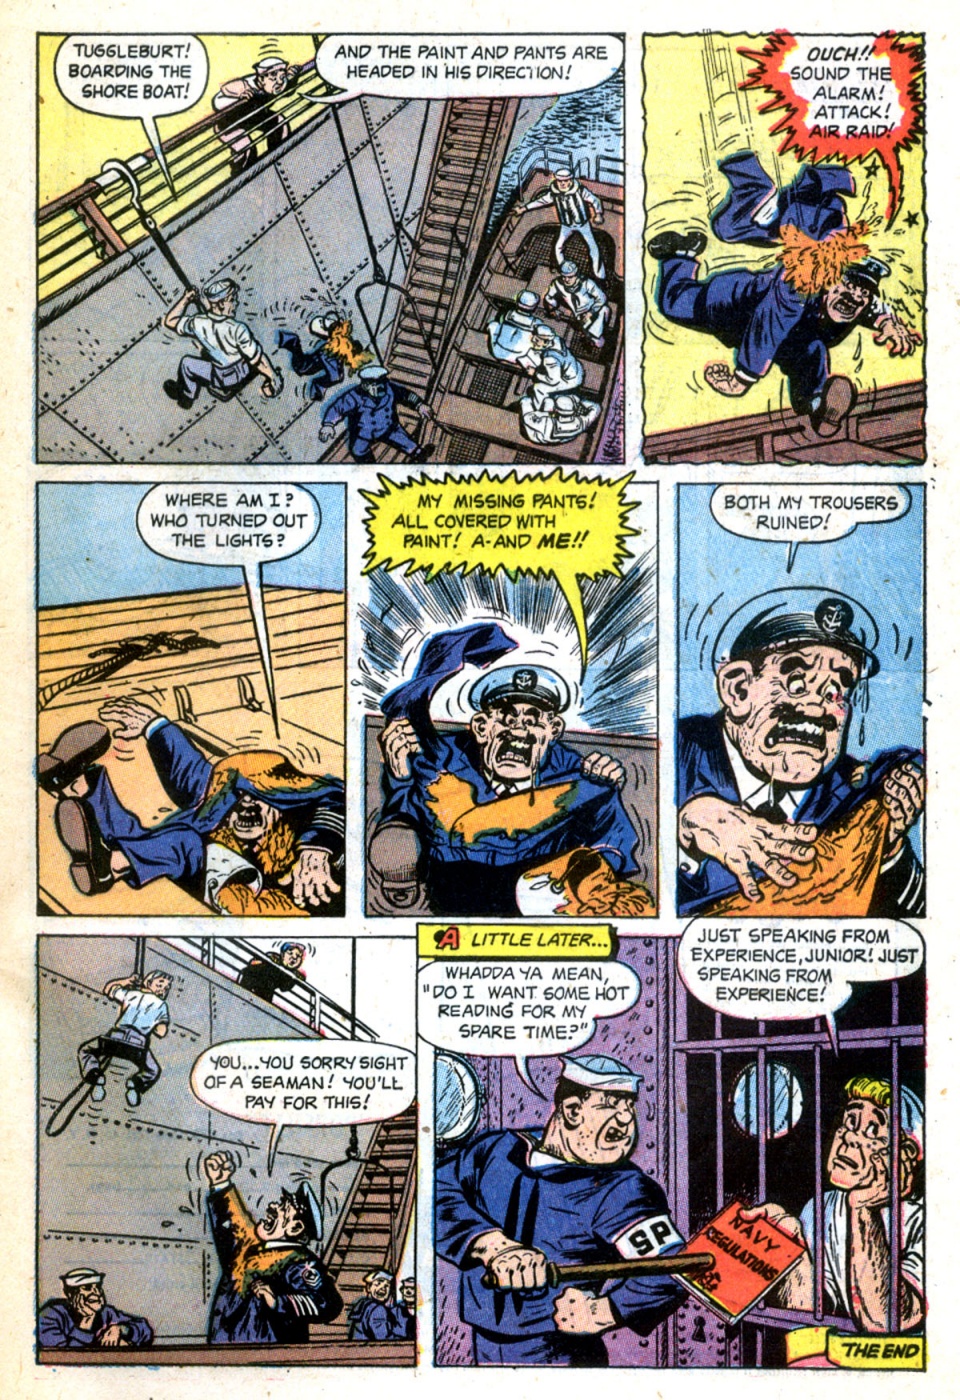 Anchors the Salt Water Daffy - Comics (c) (33)